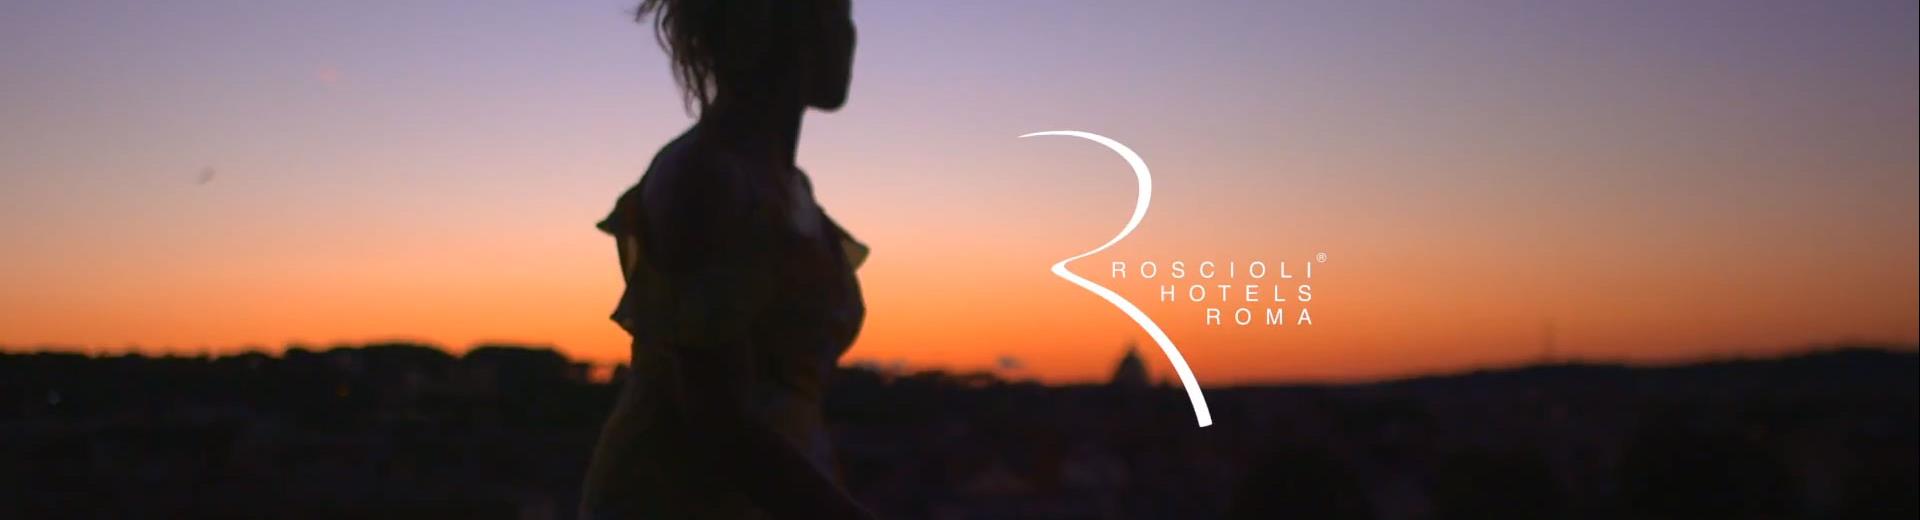 Roscioli Hotel Rome